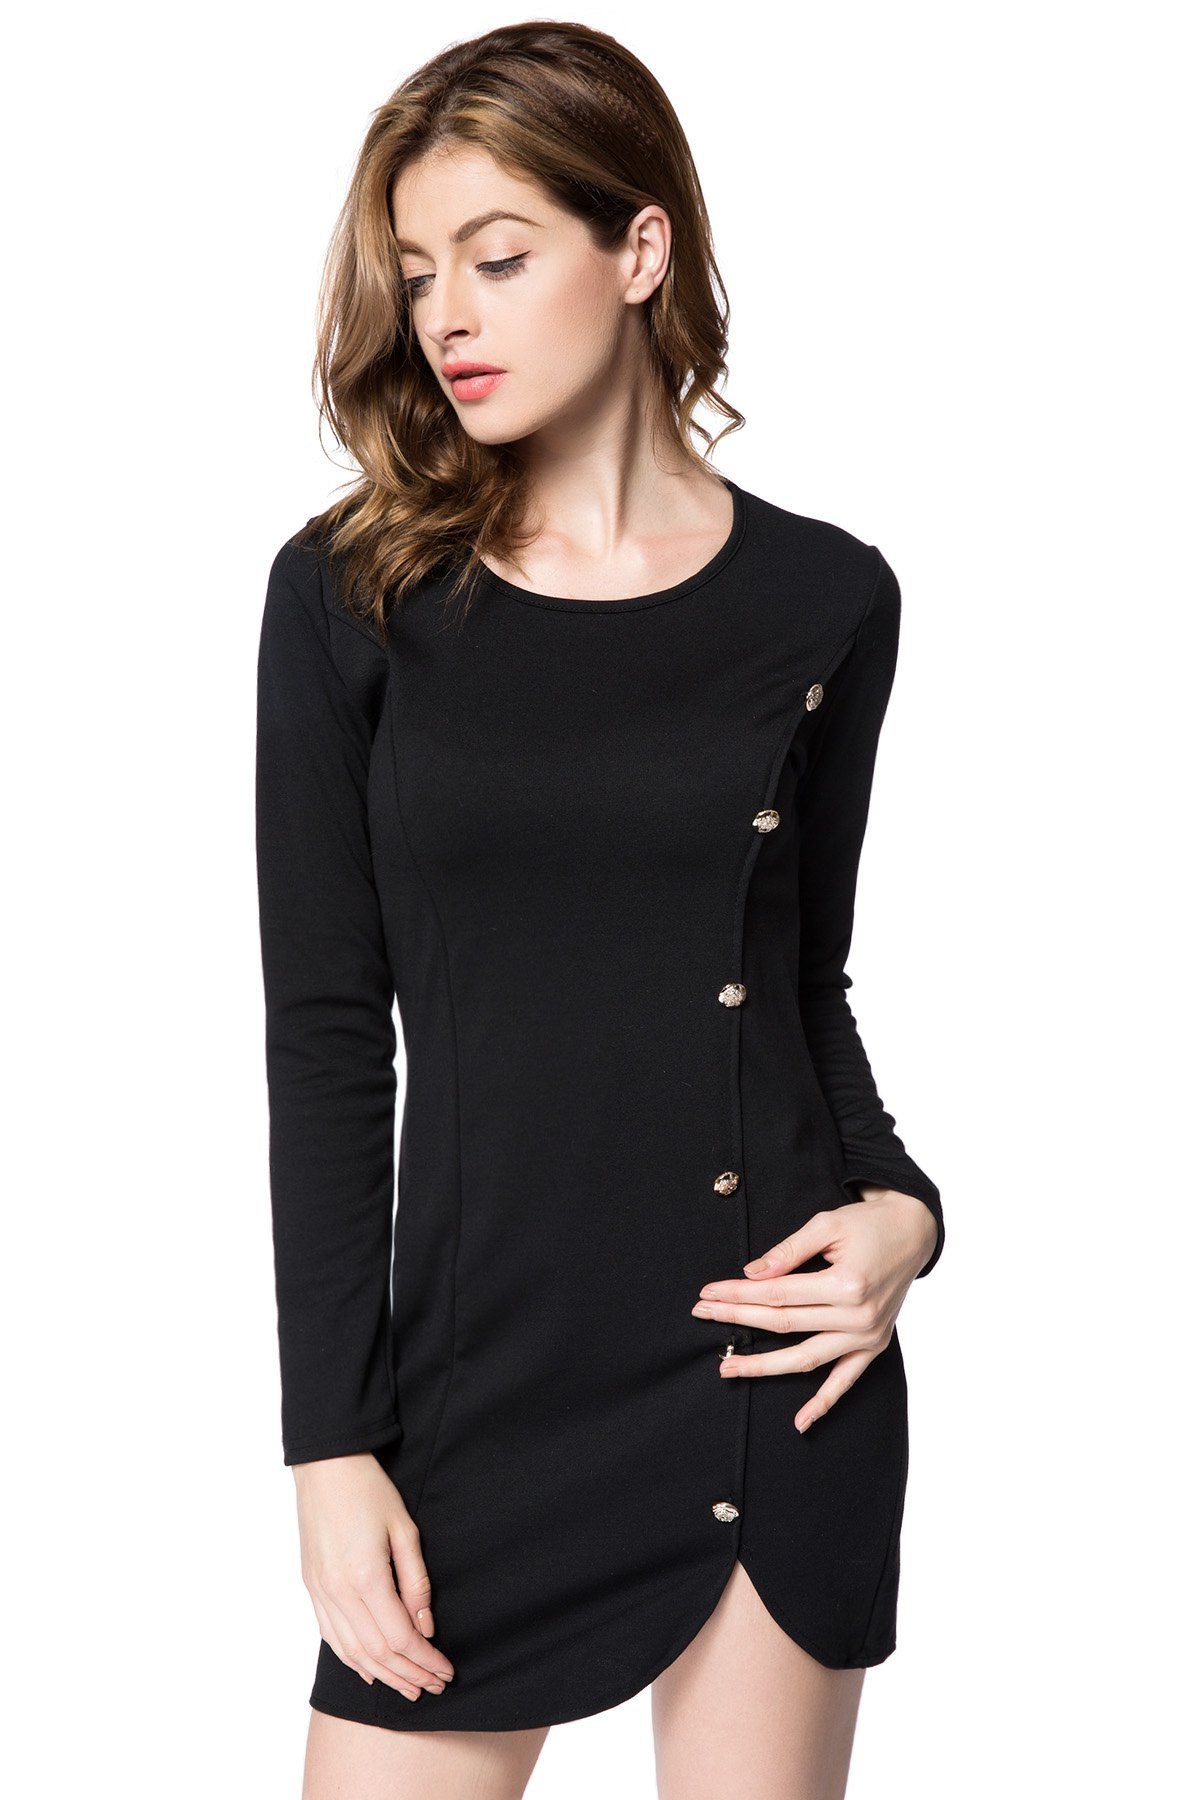 Midi black long sleeve button dress, Vans classic t shirt grey, how to button a cardigan. 